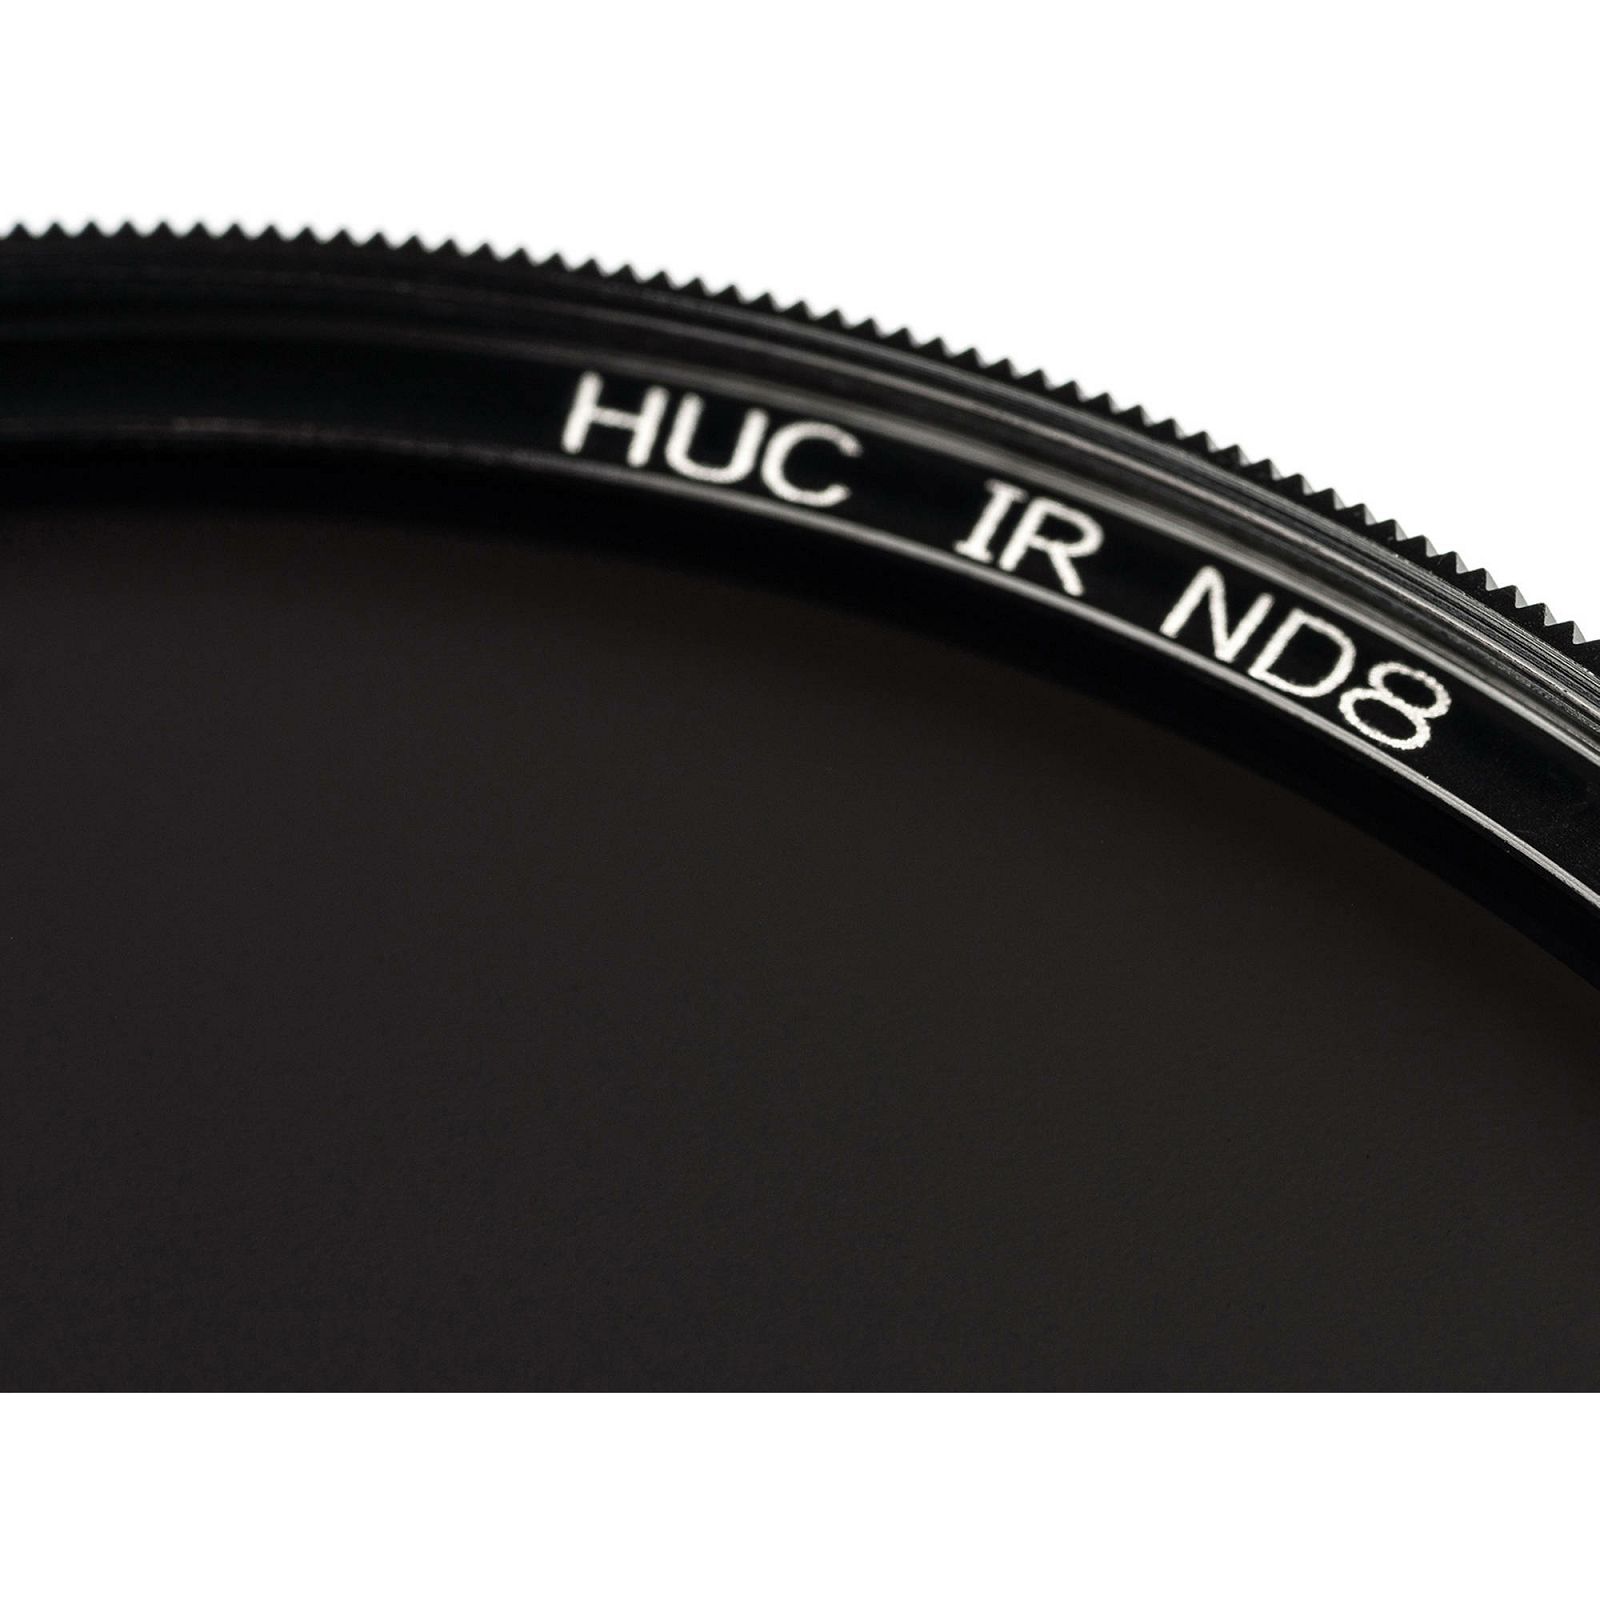 NiSi PRO Nano HUC IR ND8 ND filter 49mm